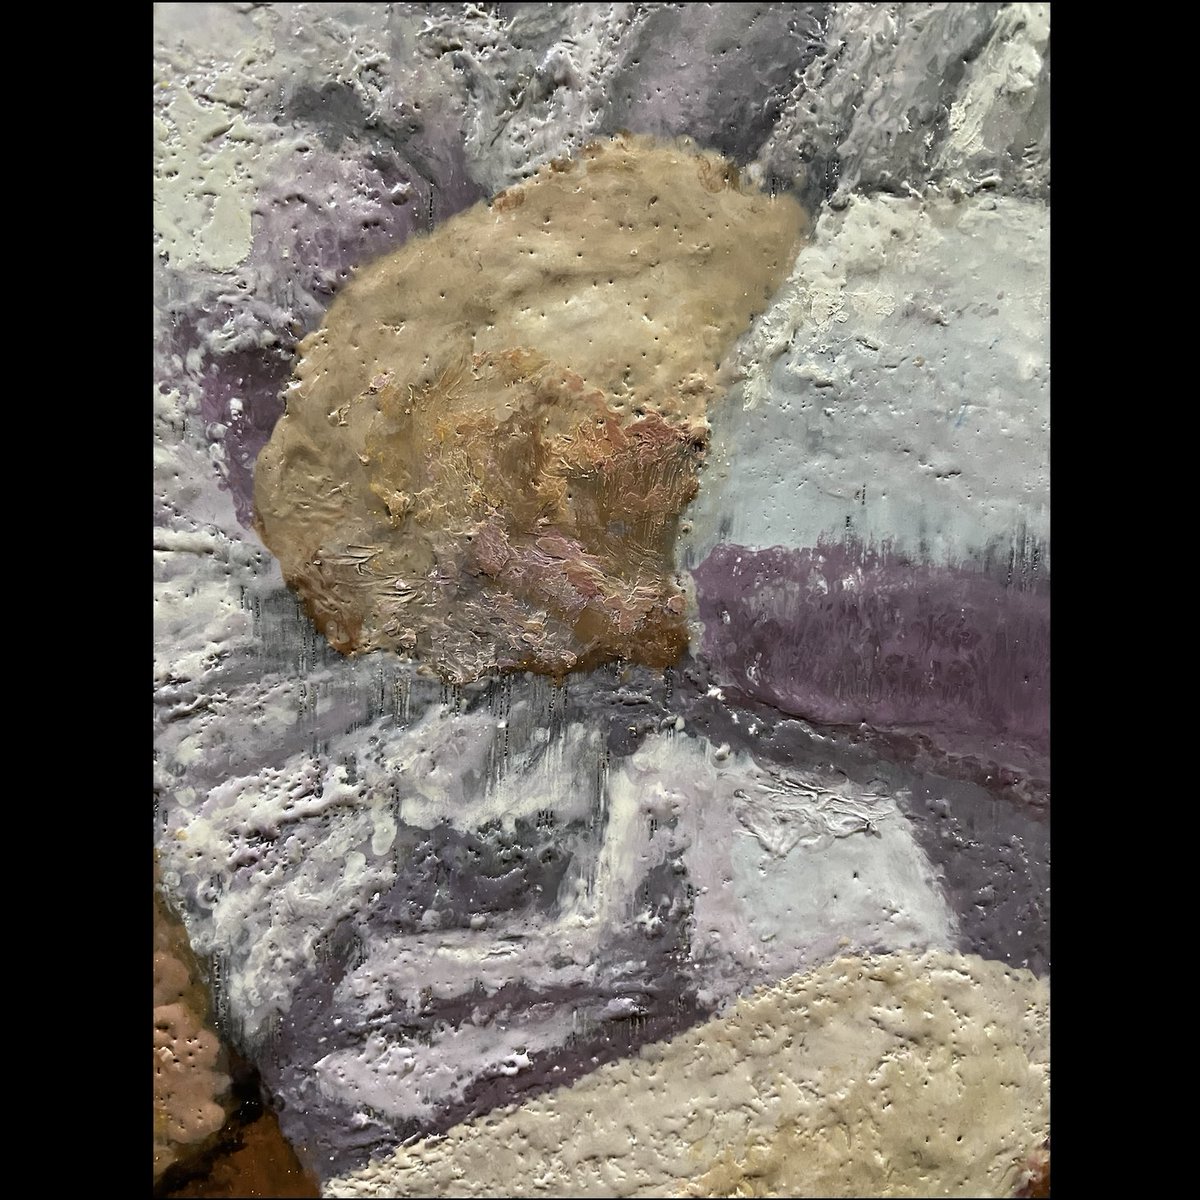 “The Hat and the Storm-Trooper (A Portrait of Hugo).” Encaustic on oak panel. #painting #art #panamahat #stormtrooper #representationalart #contemporaryart #encaustic #encausticpainting #contemporaryrealism #figurepainting #composition #color #portrait #texture #paletteknife